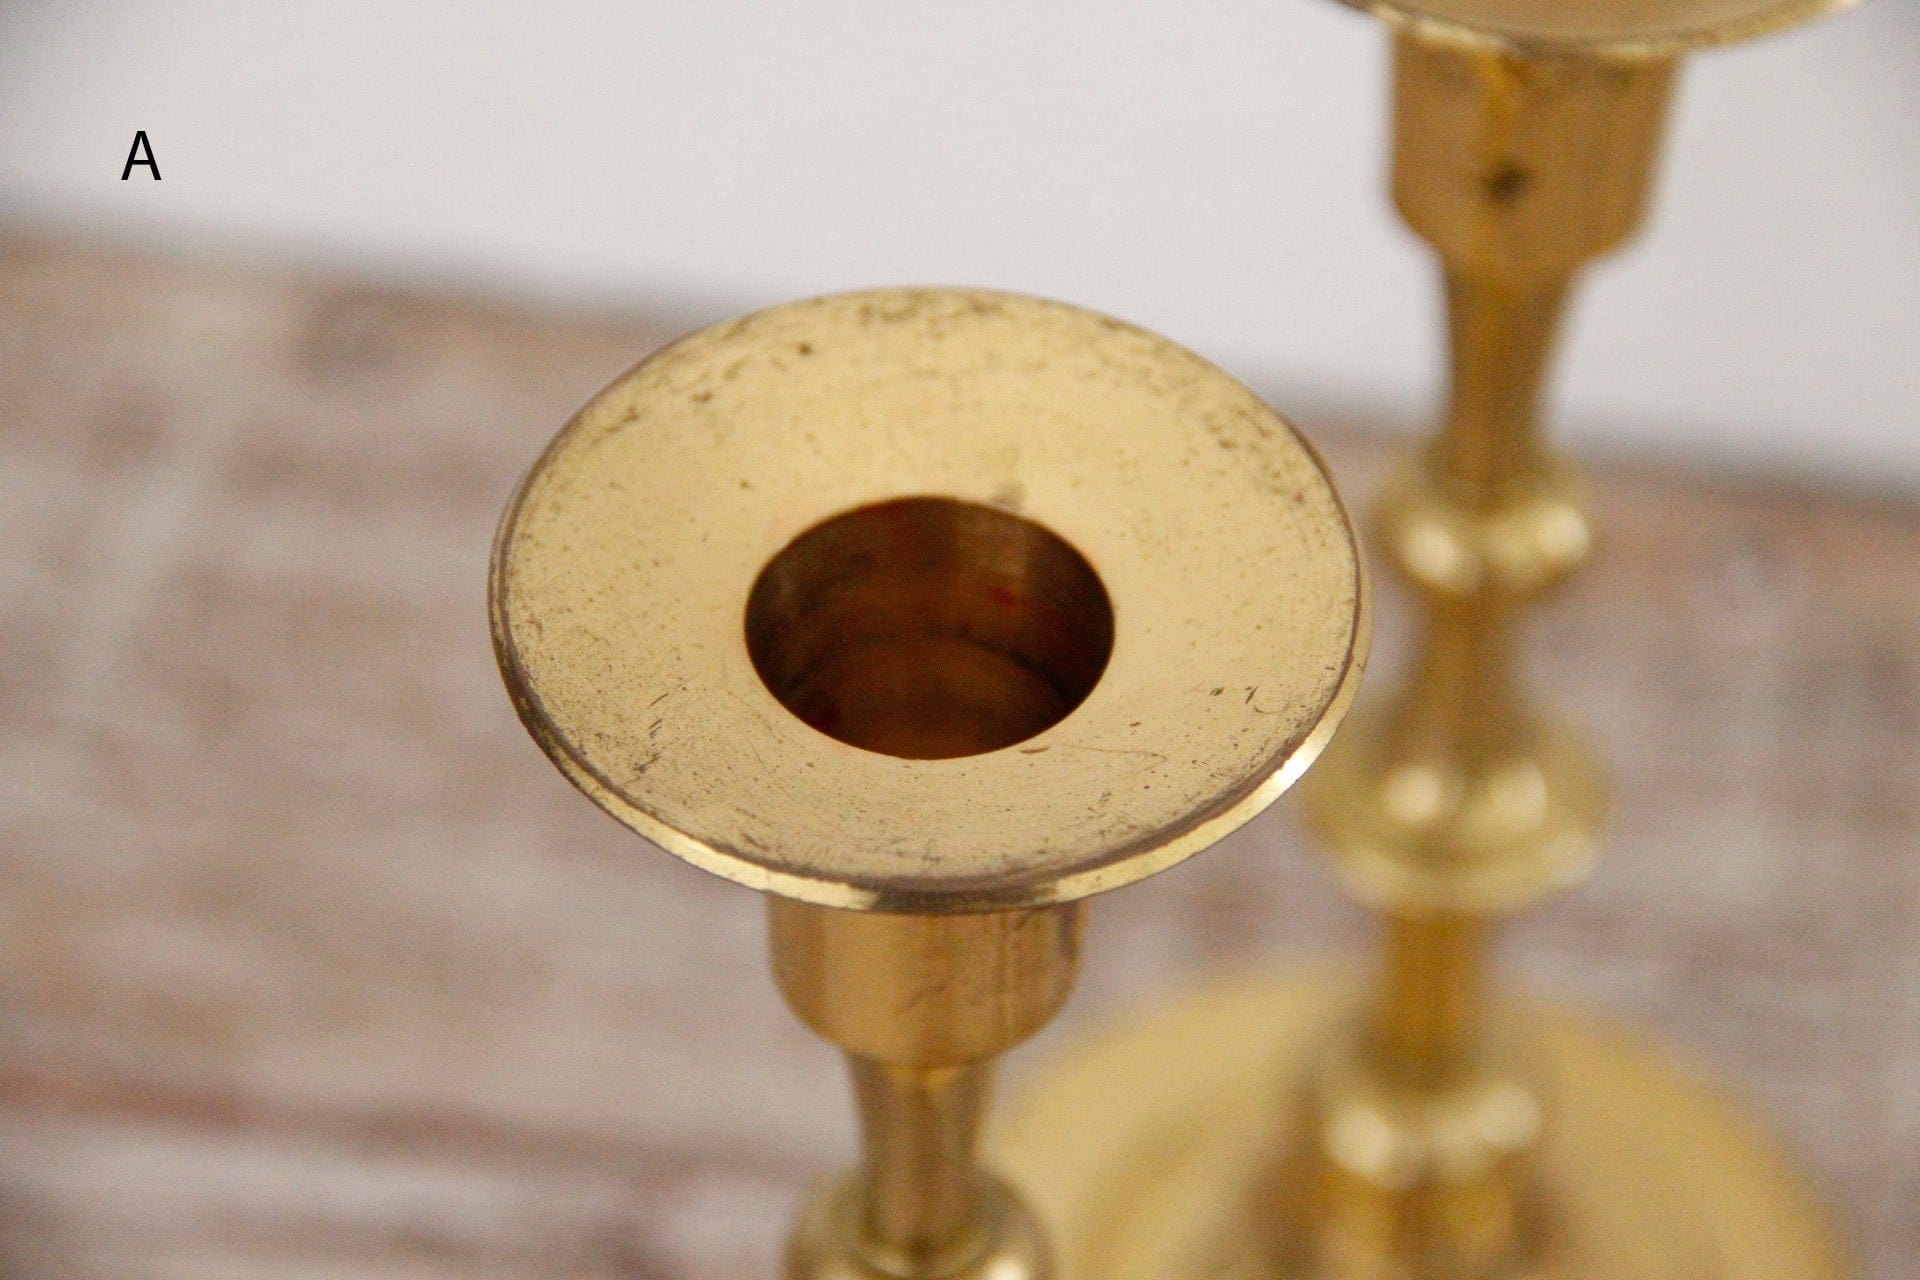 Assorted Vintage Brass Candle Holder | Pair Candle Holder